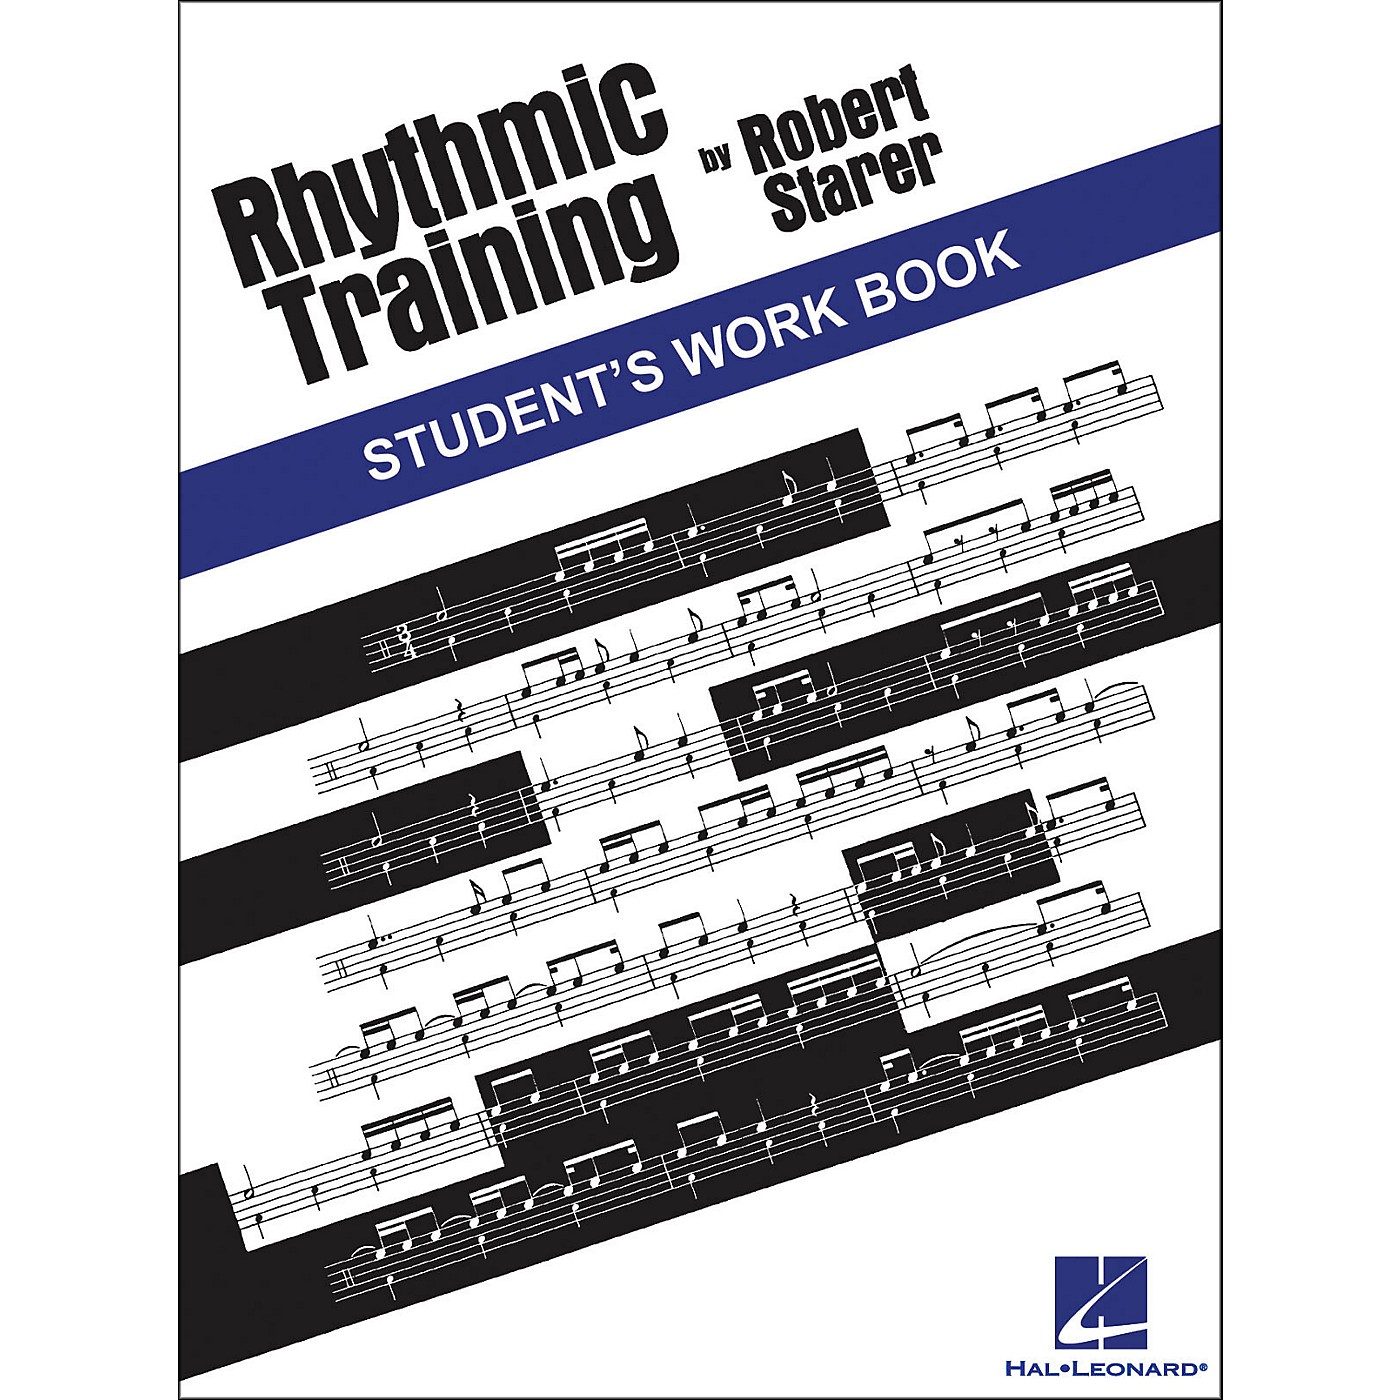 Hal Leonard Rhythmic Training Student's Workbook thumbnail